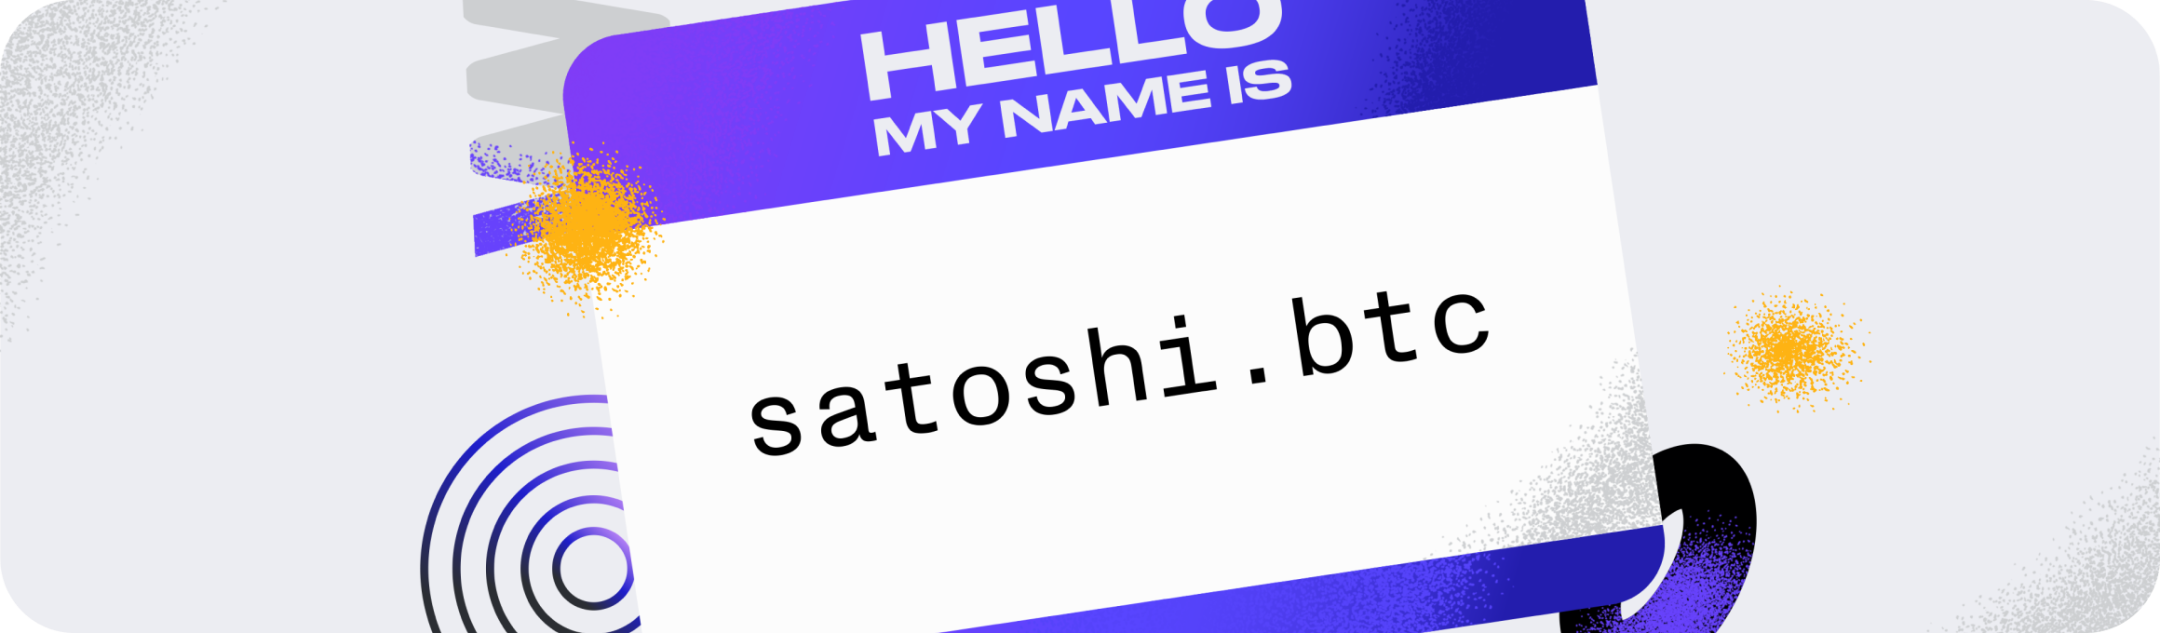 Hello, my name is satoshi.btc!